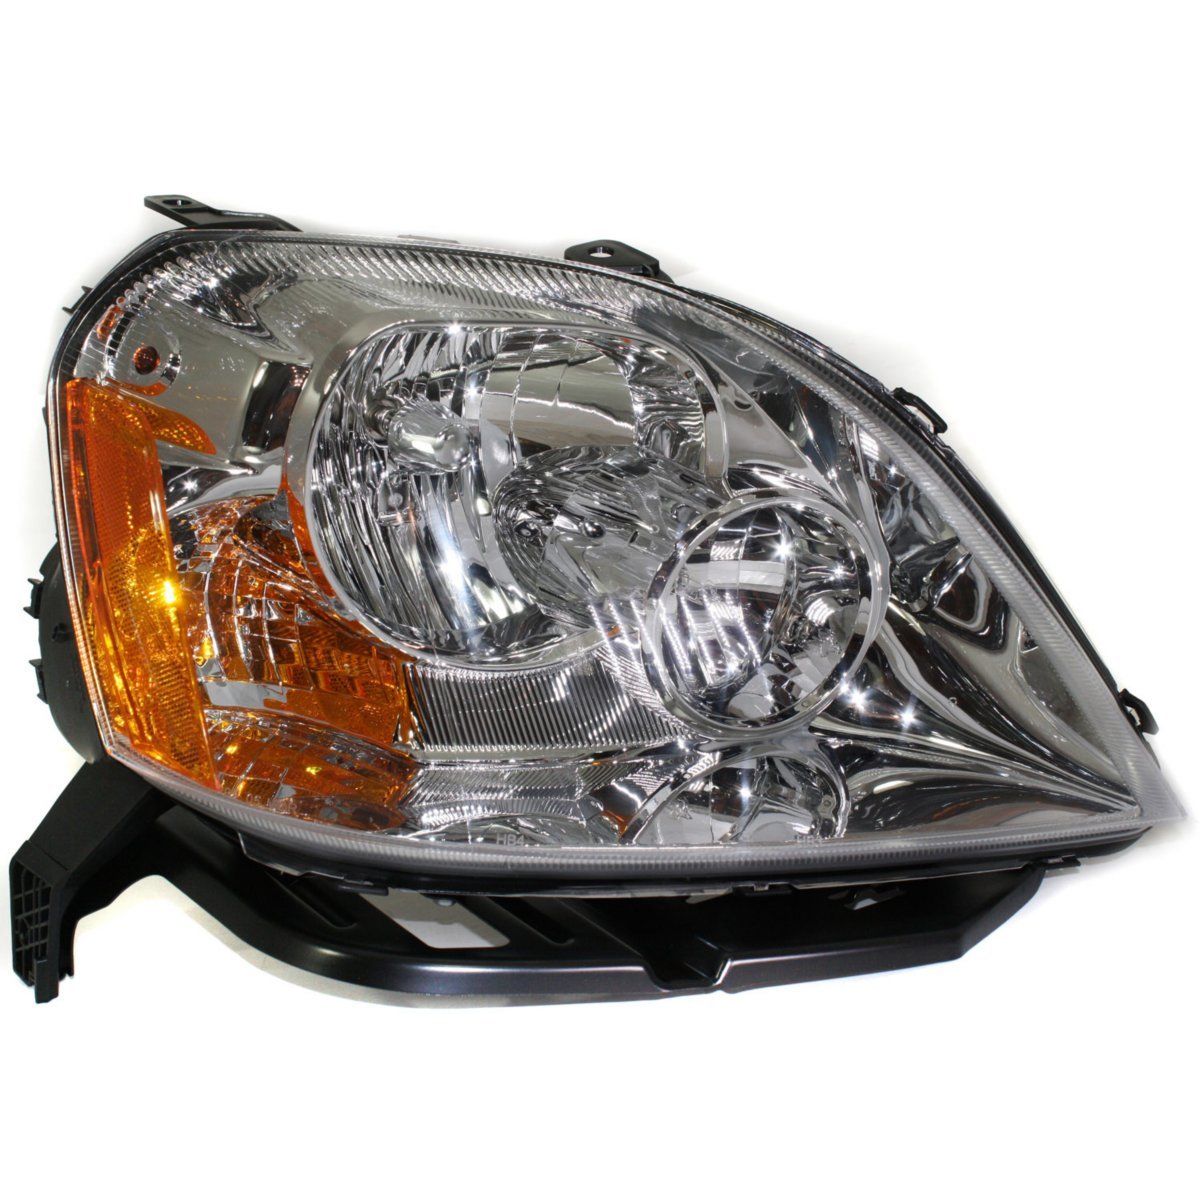 Halogen Headlight For 2005-2007 Ford Five Hundred Right w/ Bulb | eBay Headlight Bulb For 2005 Ford Five Hundred